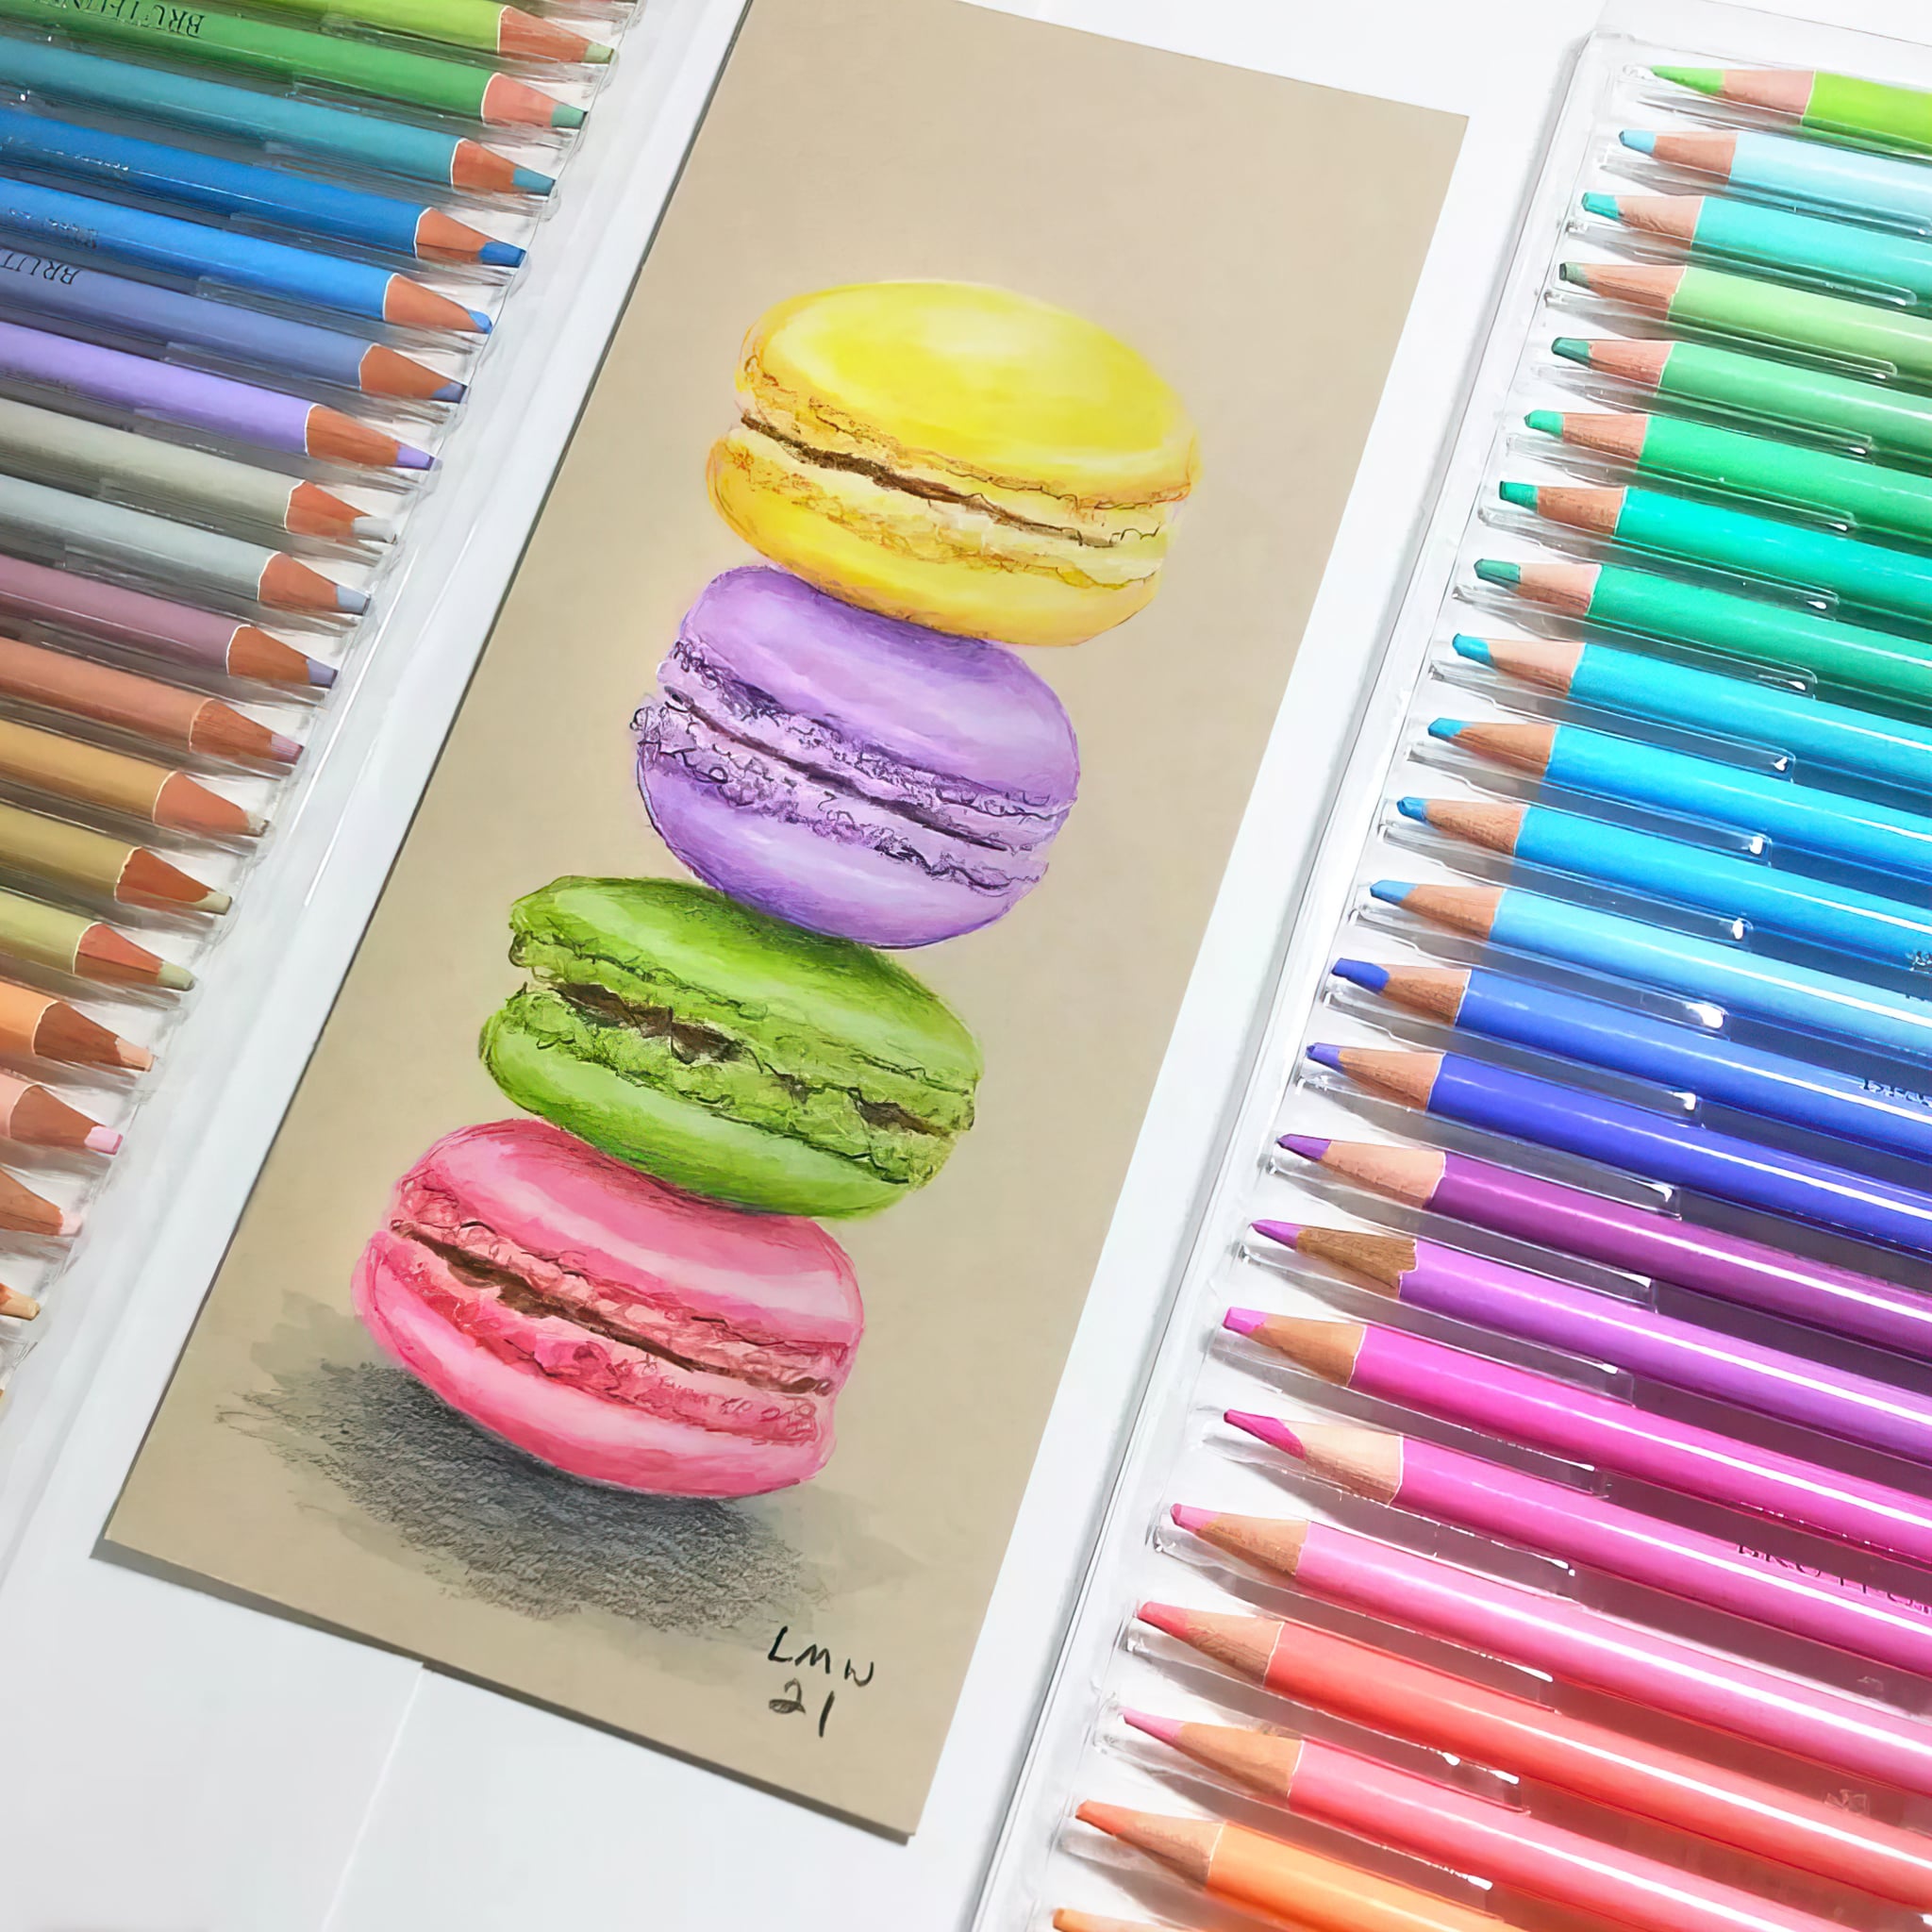 Macaron Colored Pencils